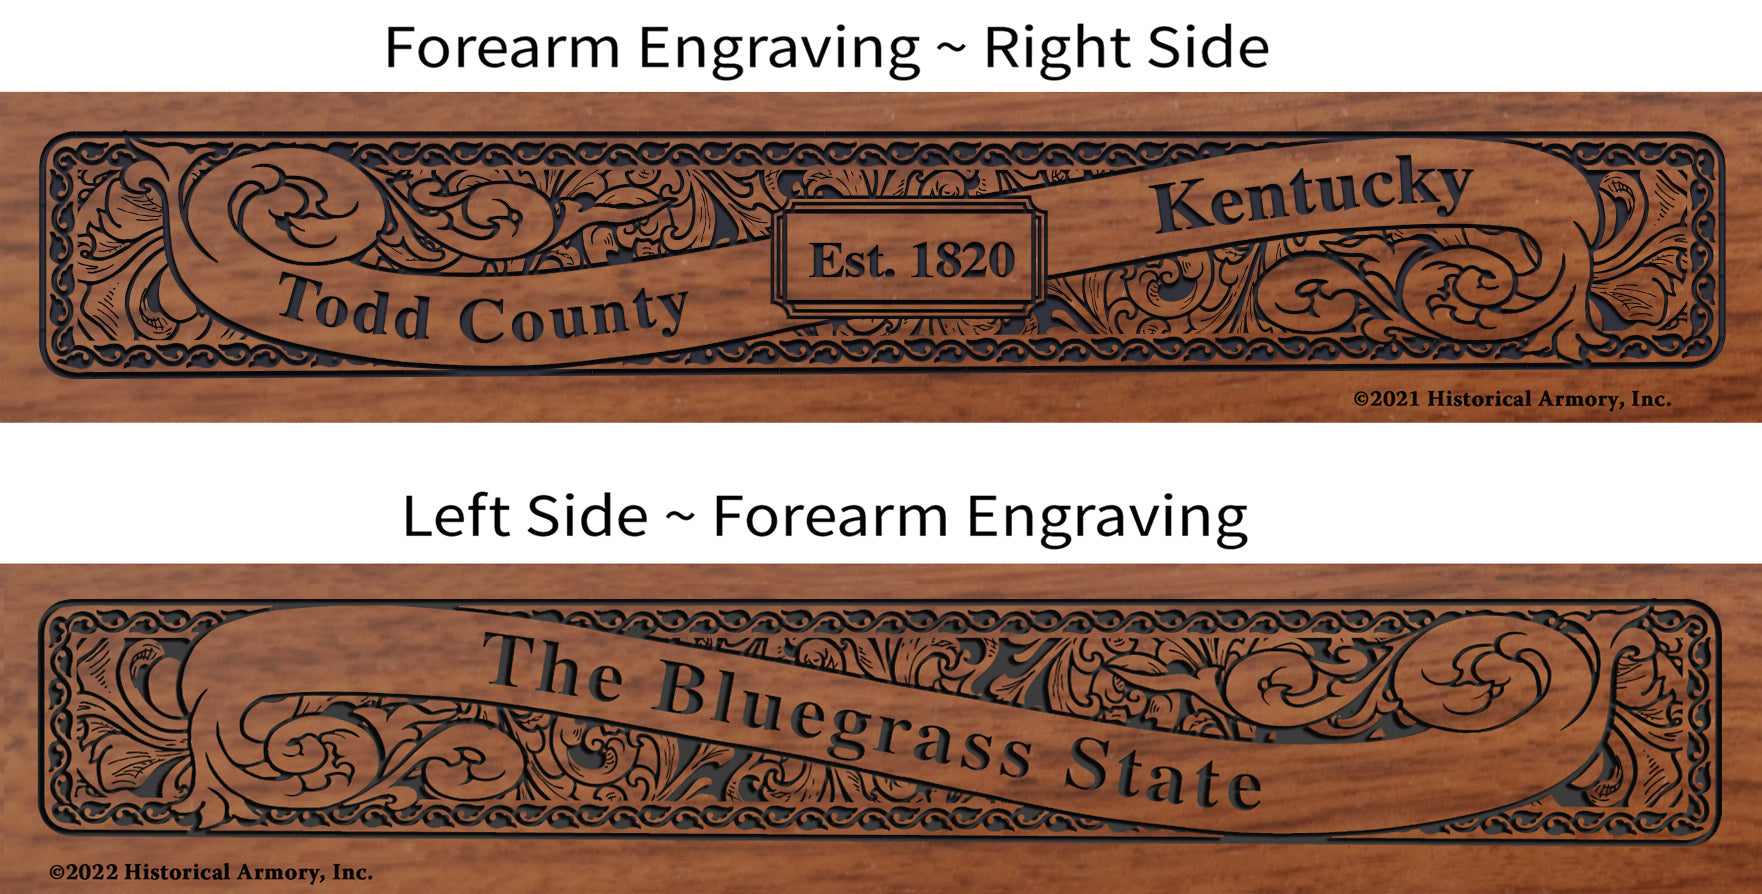 Todd County Kentucky Engraved Rifle Forearm